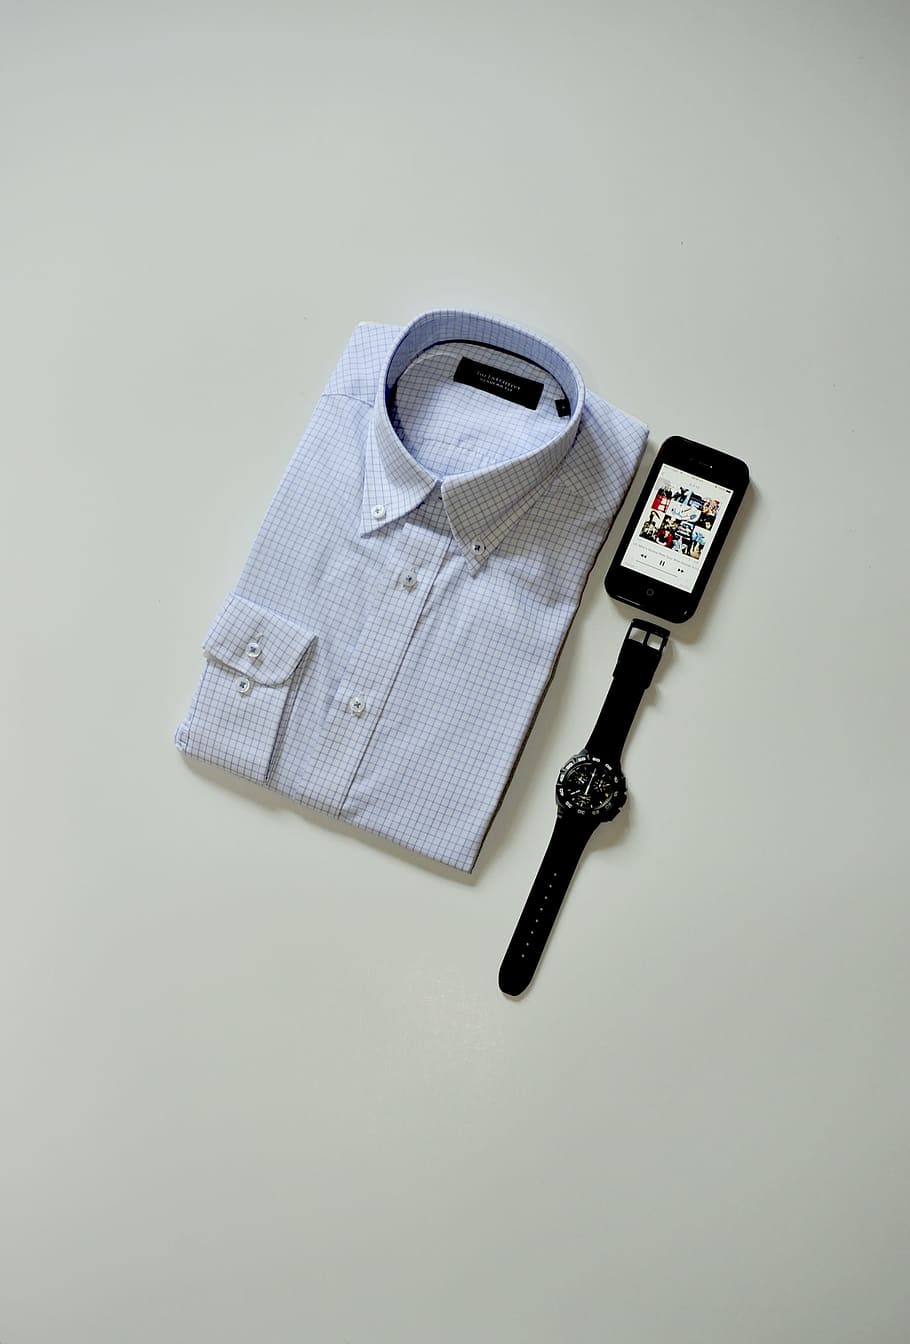 HD Wallpaper: White Button Down Shirt, Gentleman, Watch, Style